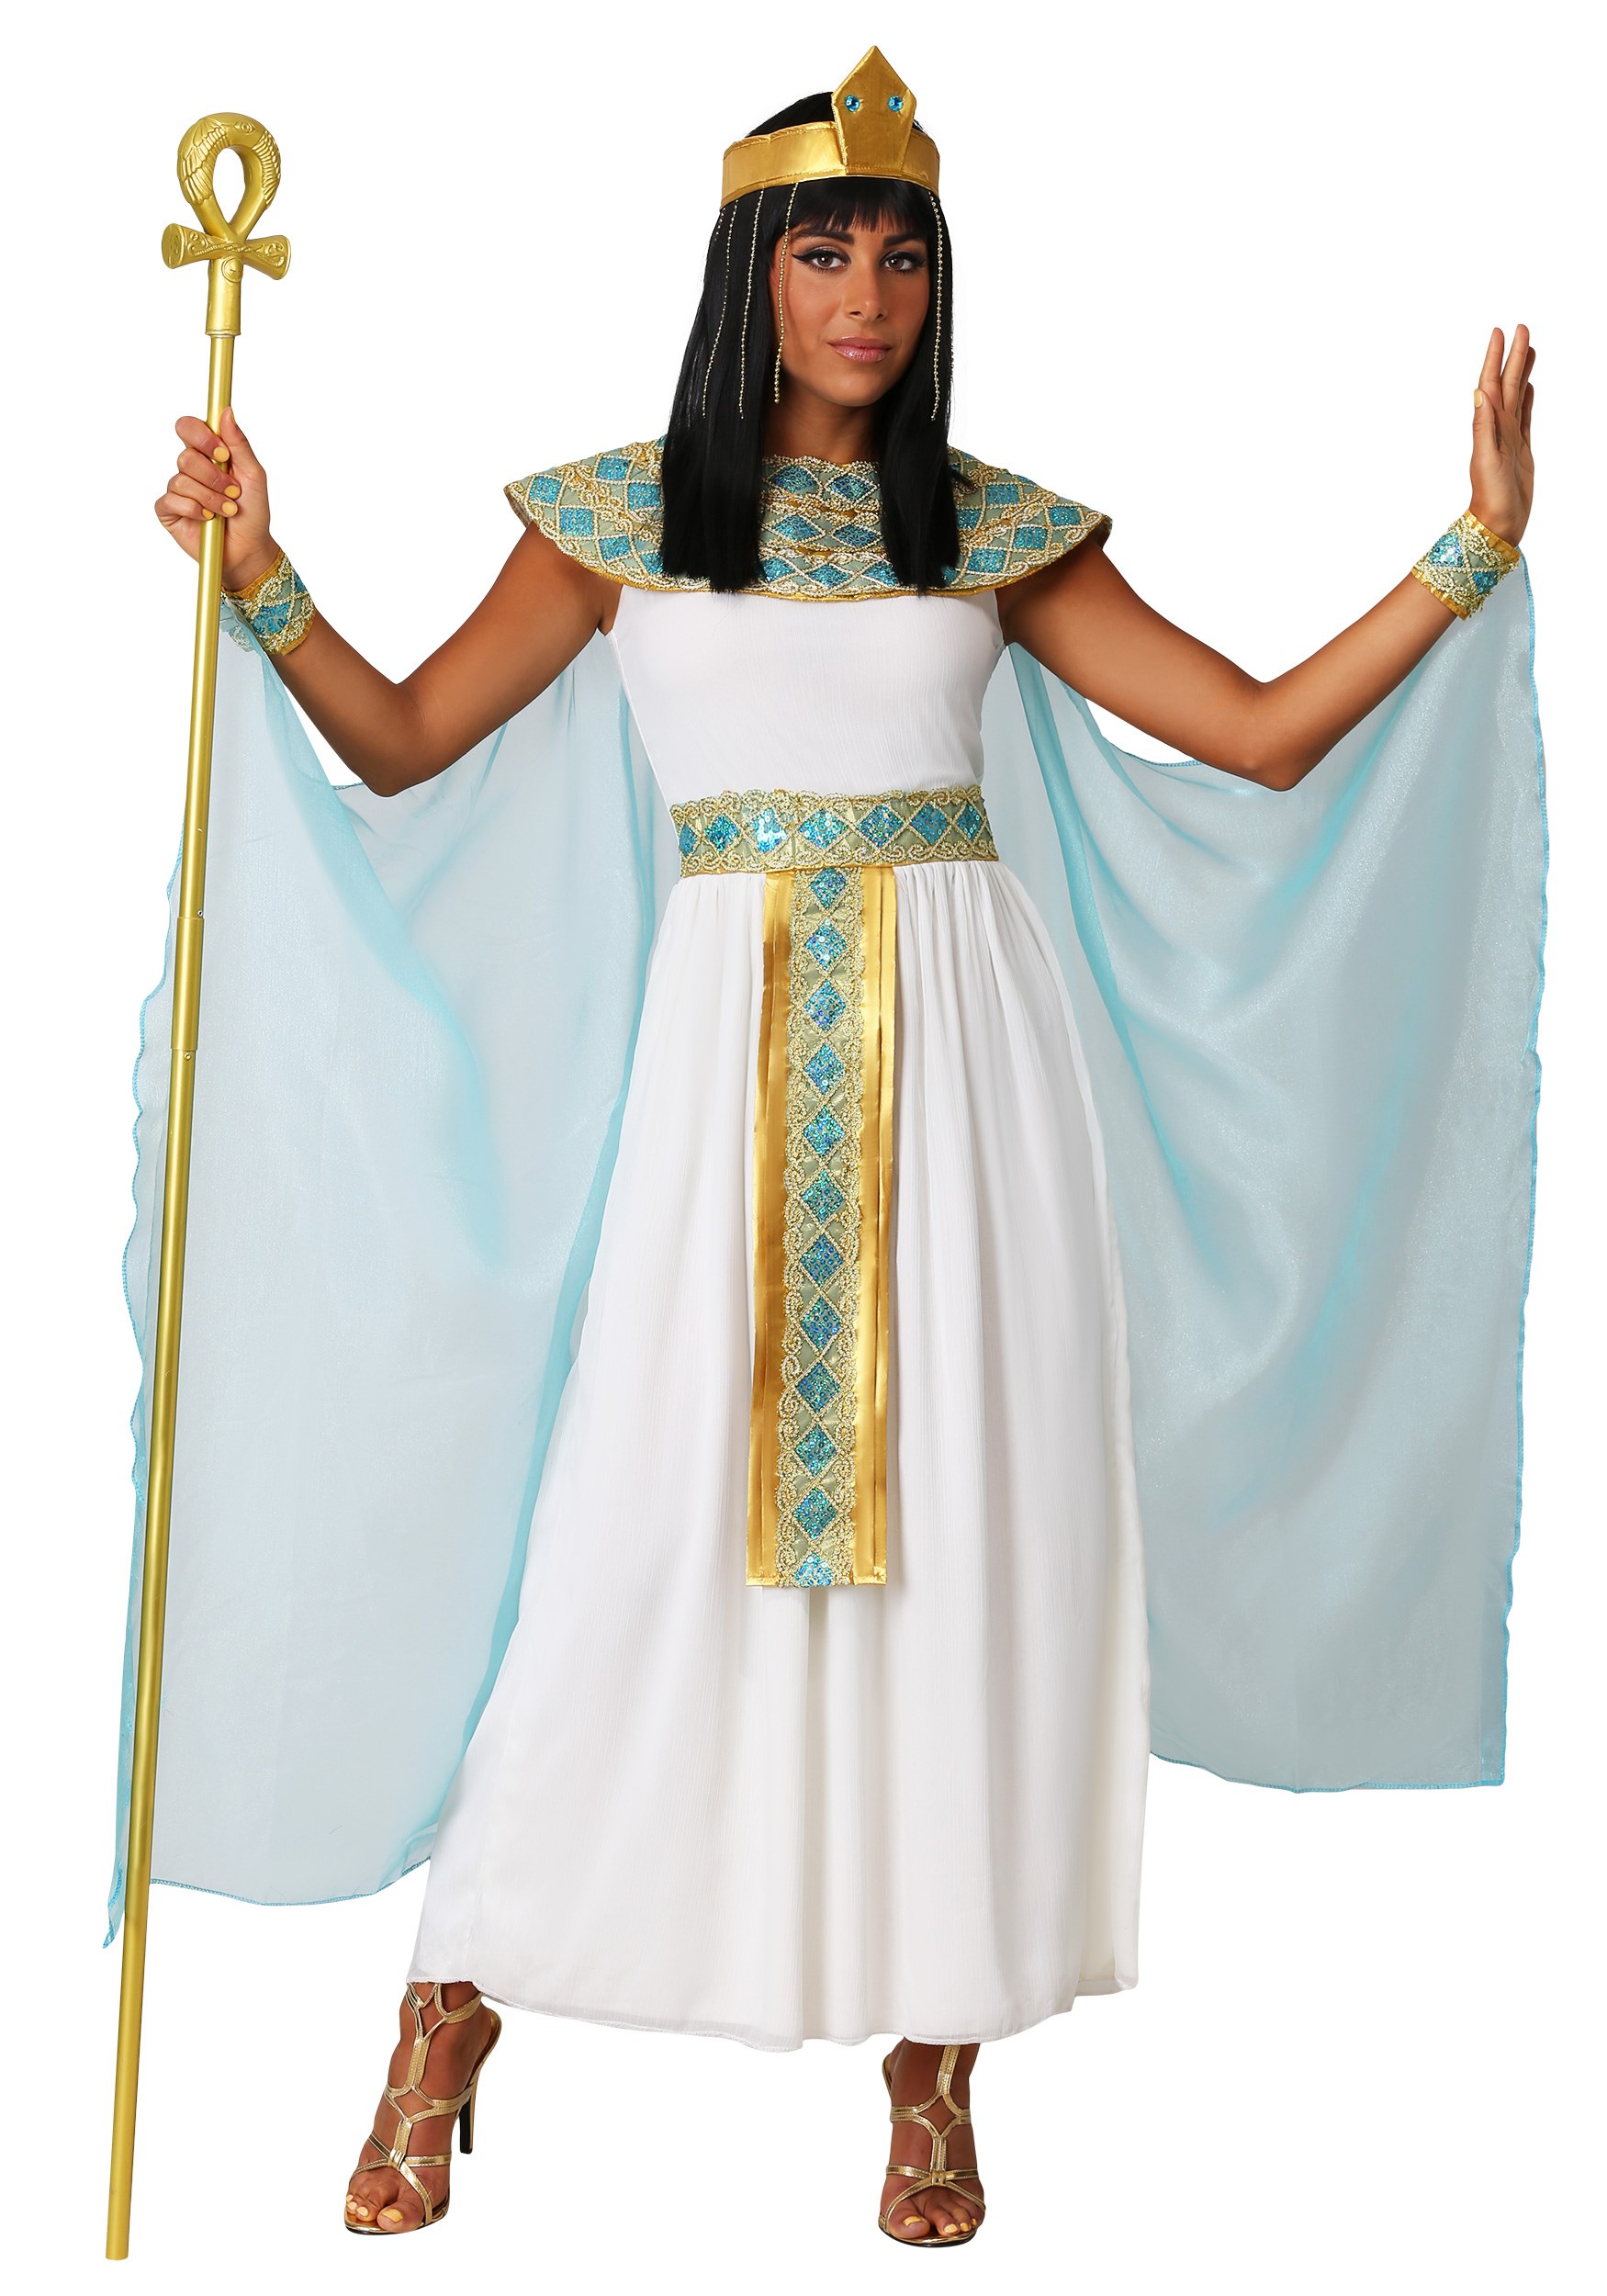 Adult Cleopatra Costume